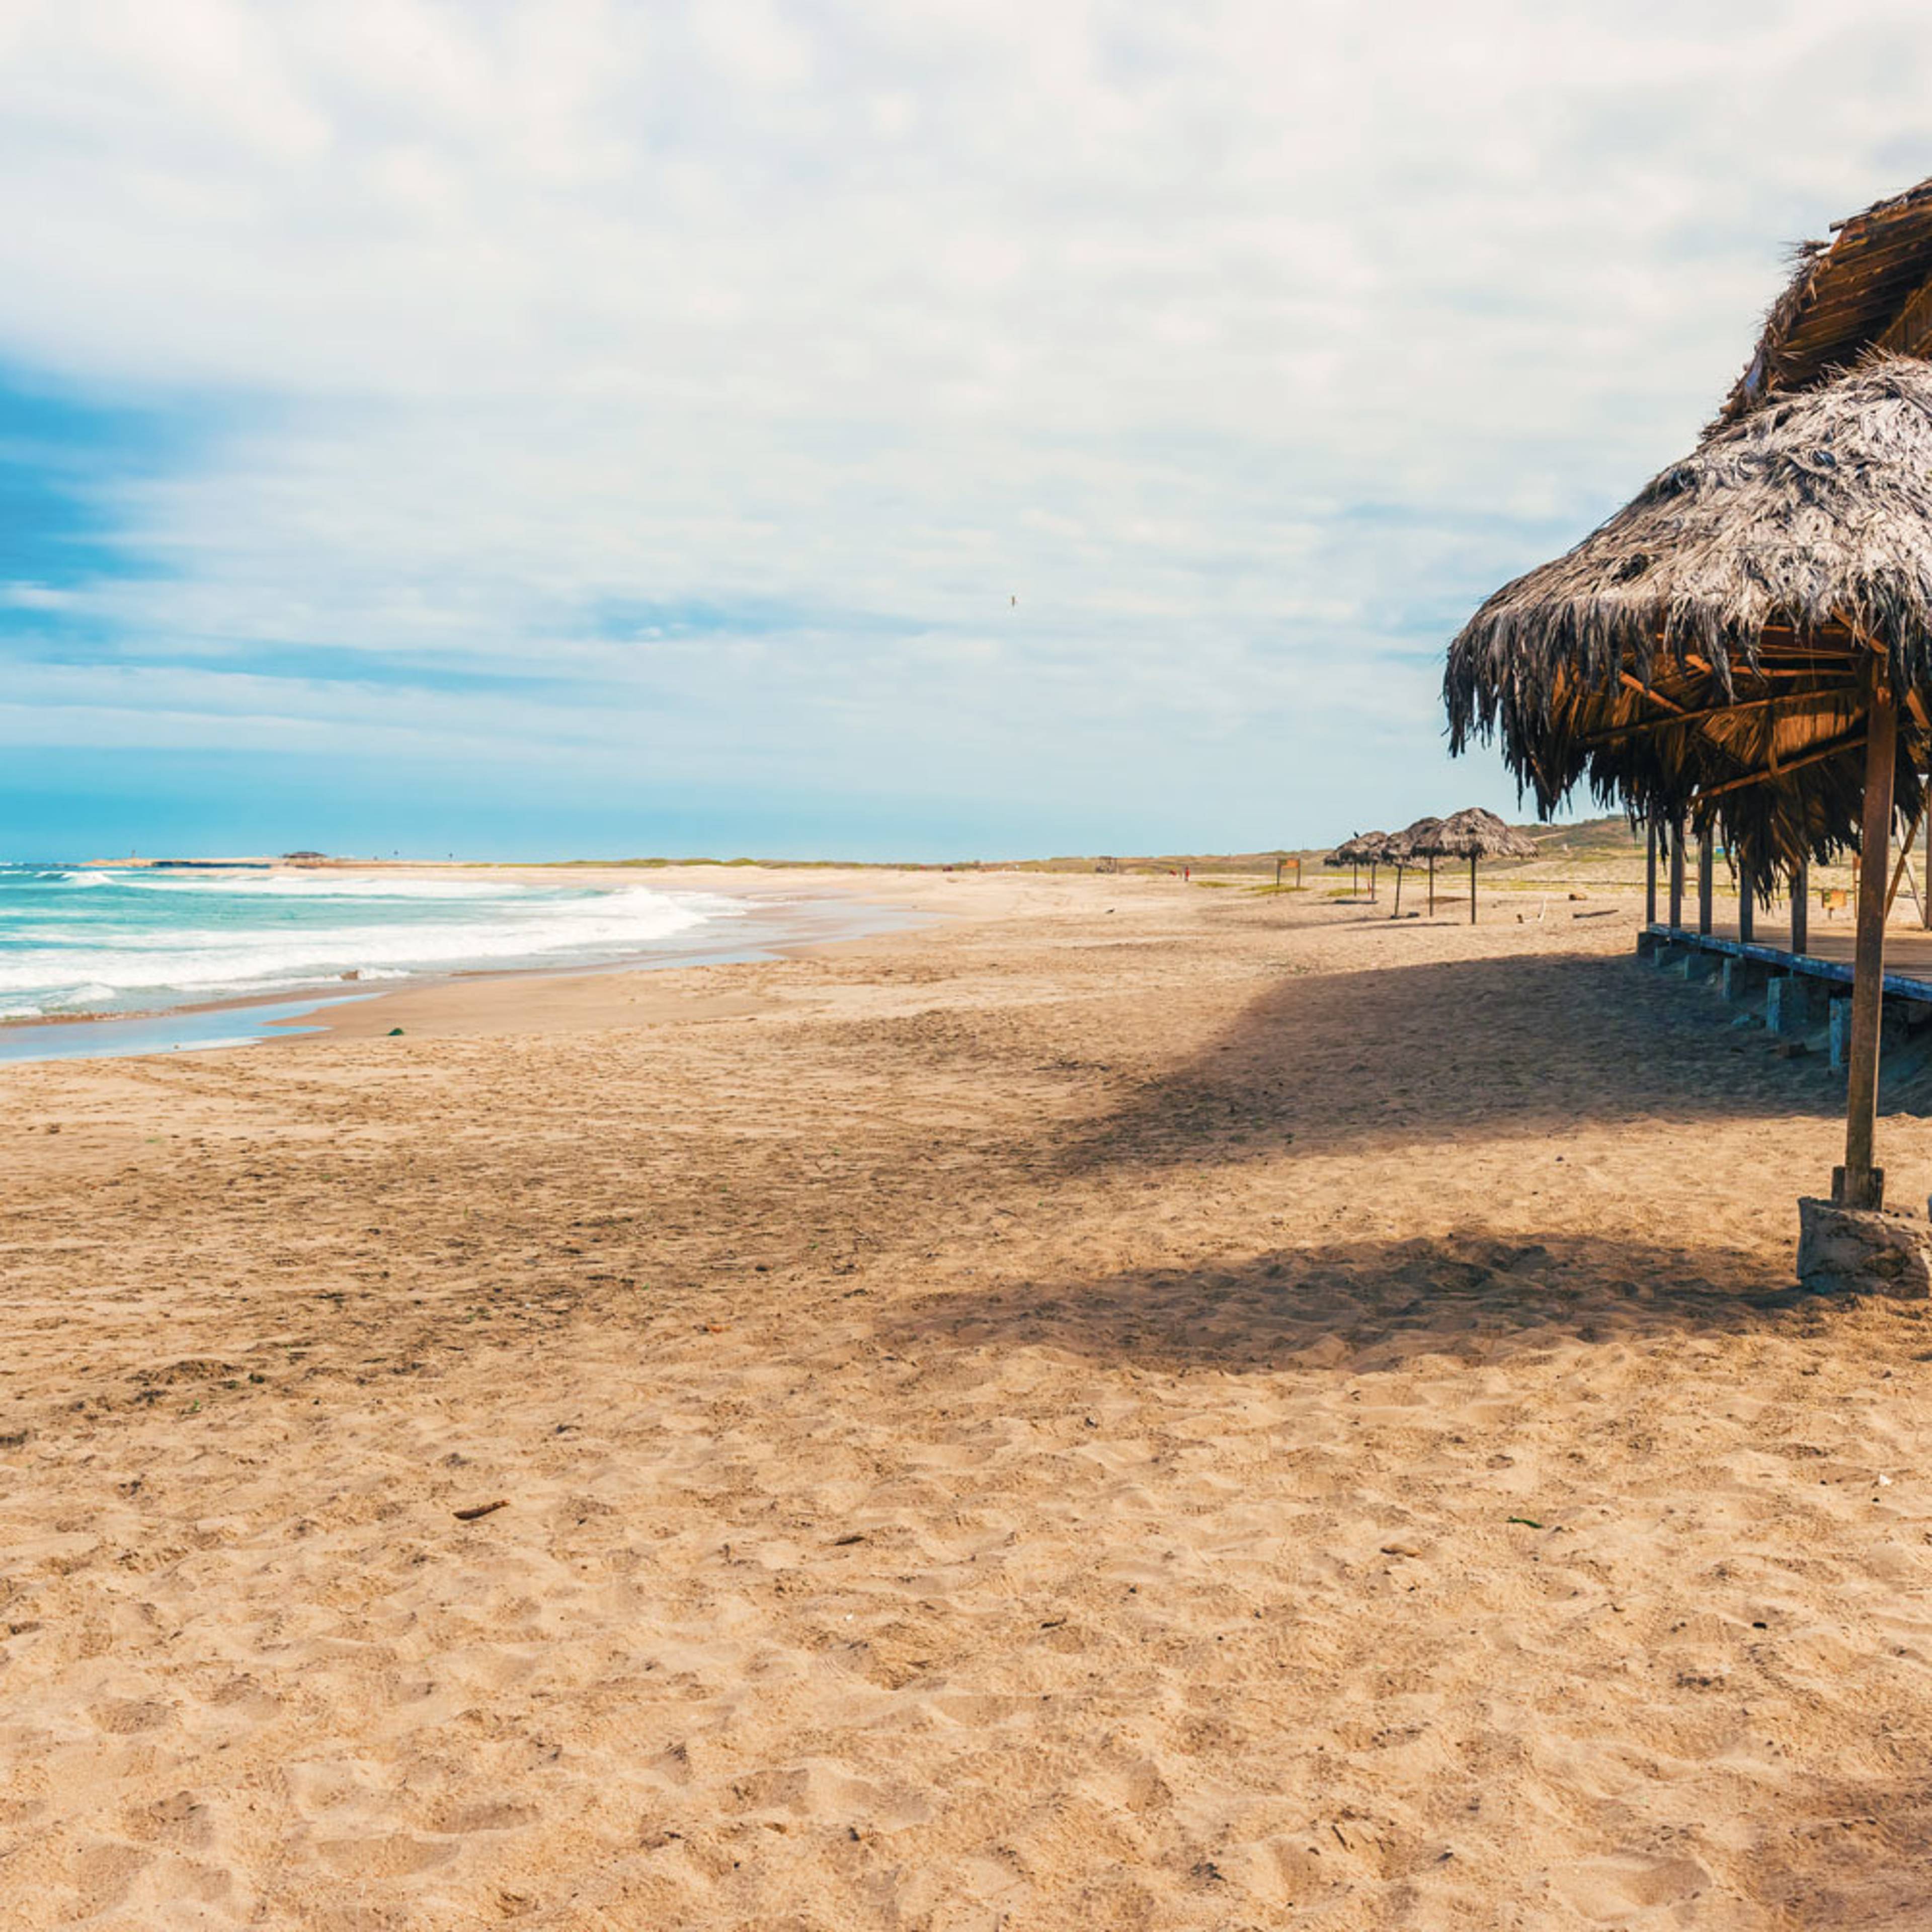 Design your perfect tour of Ecuador's beaches with a local expert